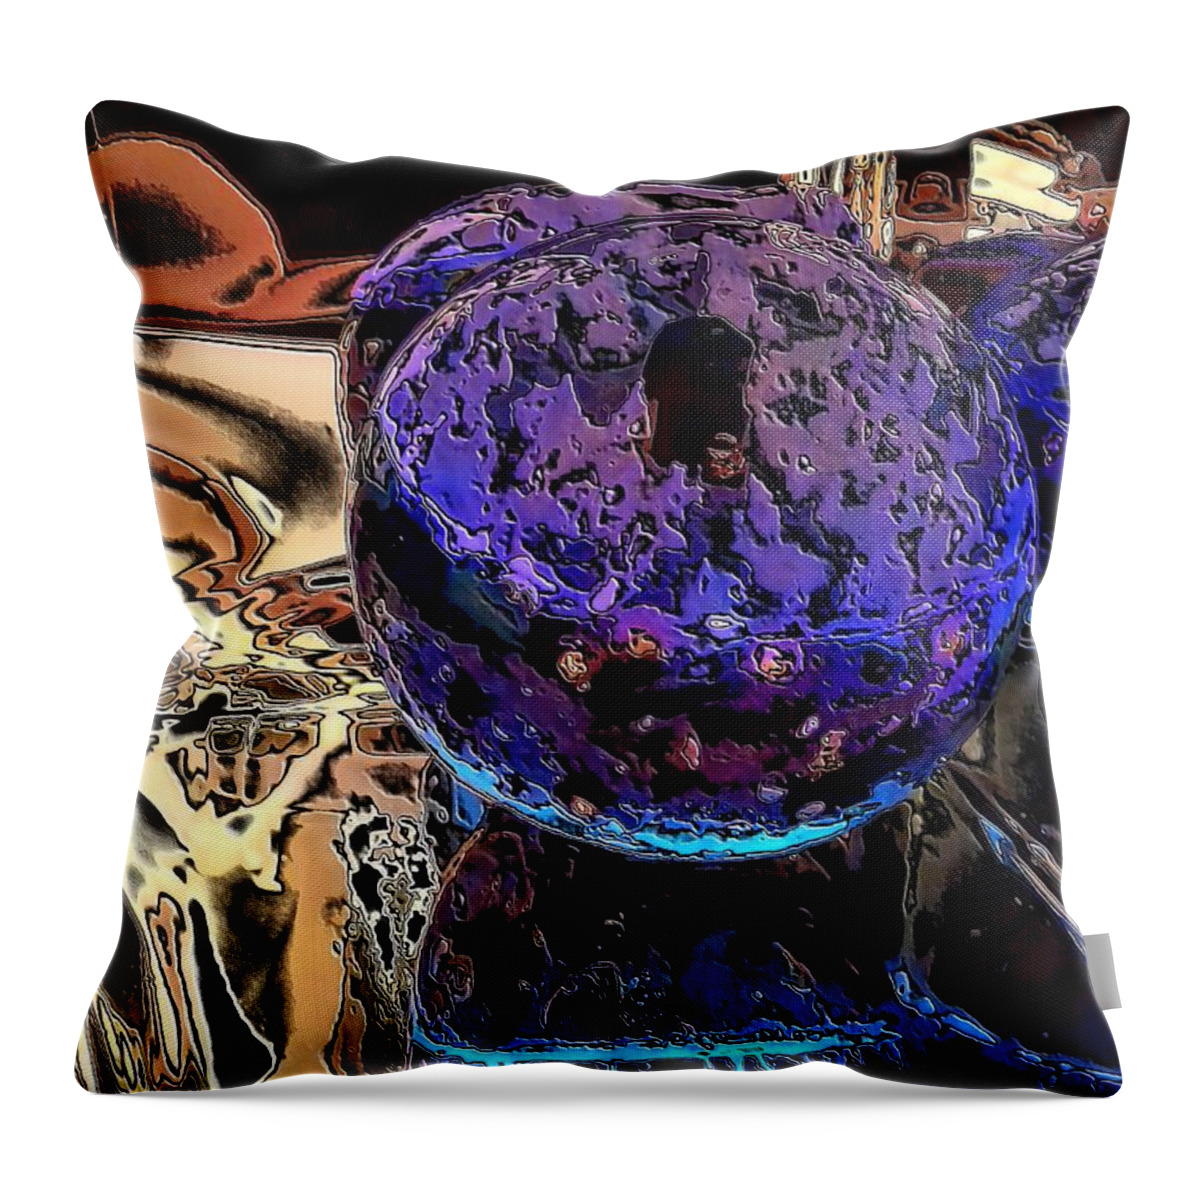 Digital Art Throw Pillow featuring the digital art Abstract Orgone #66 by Belinda Cox